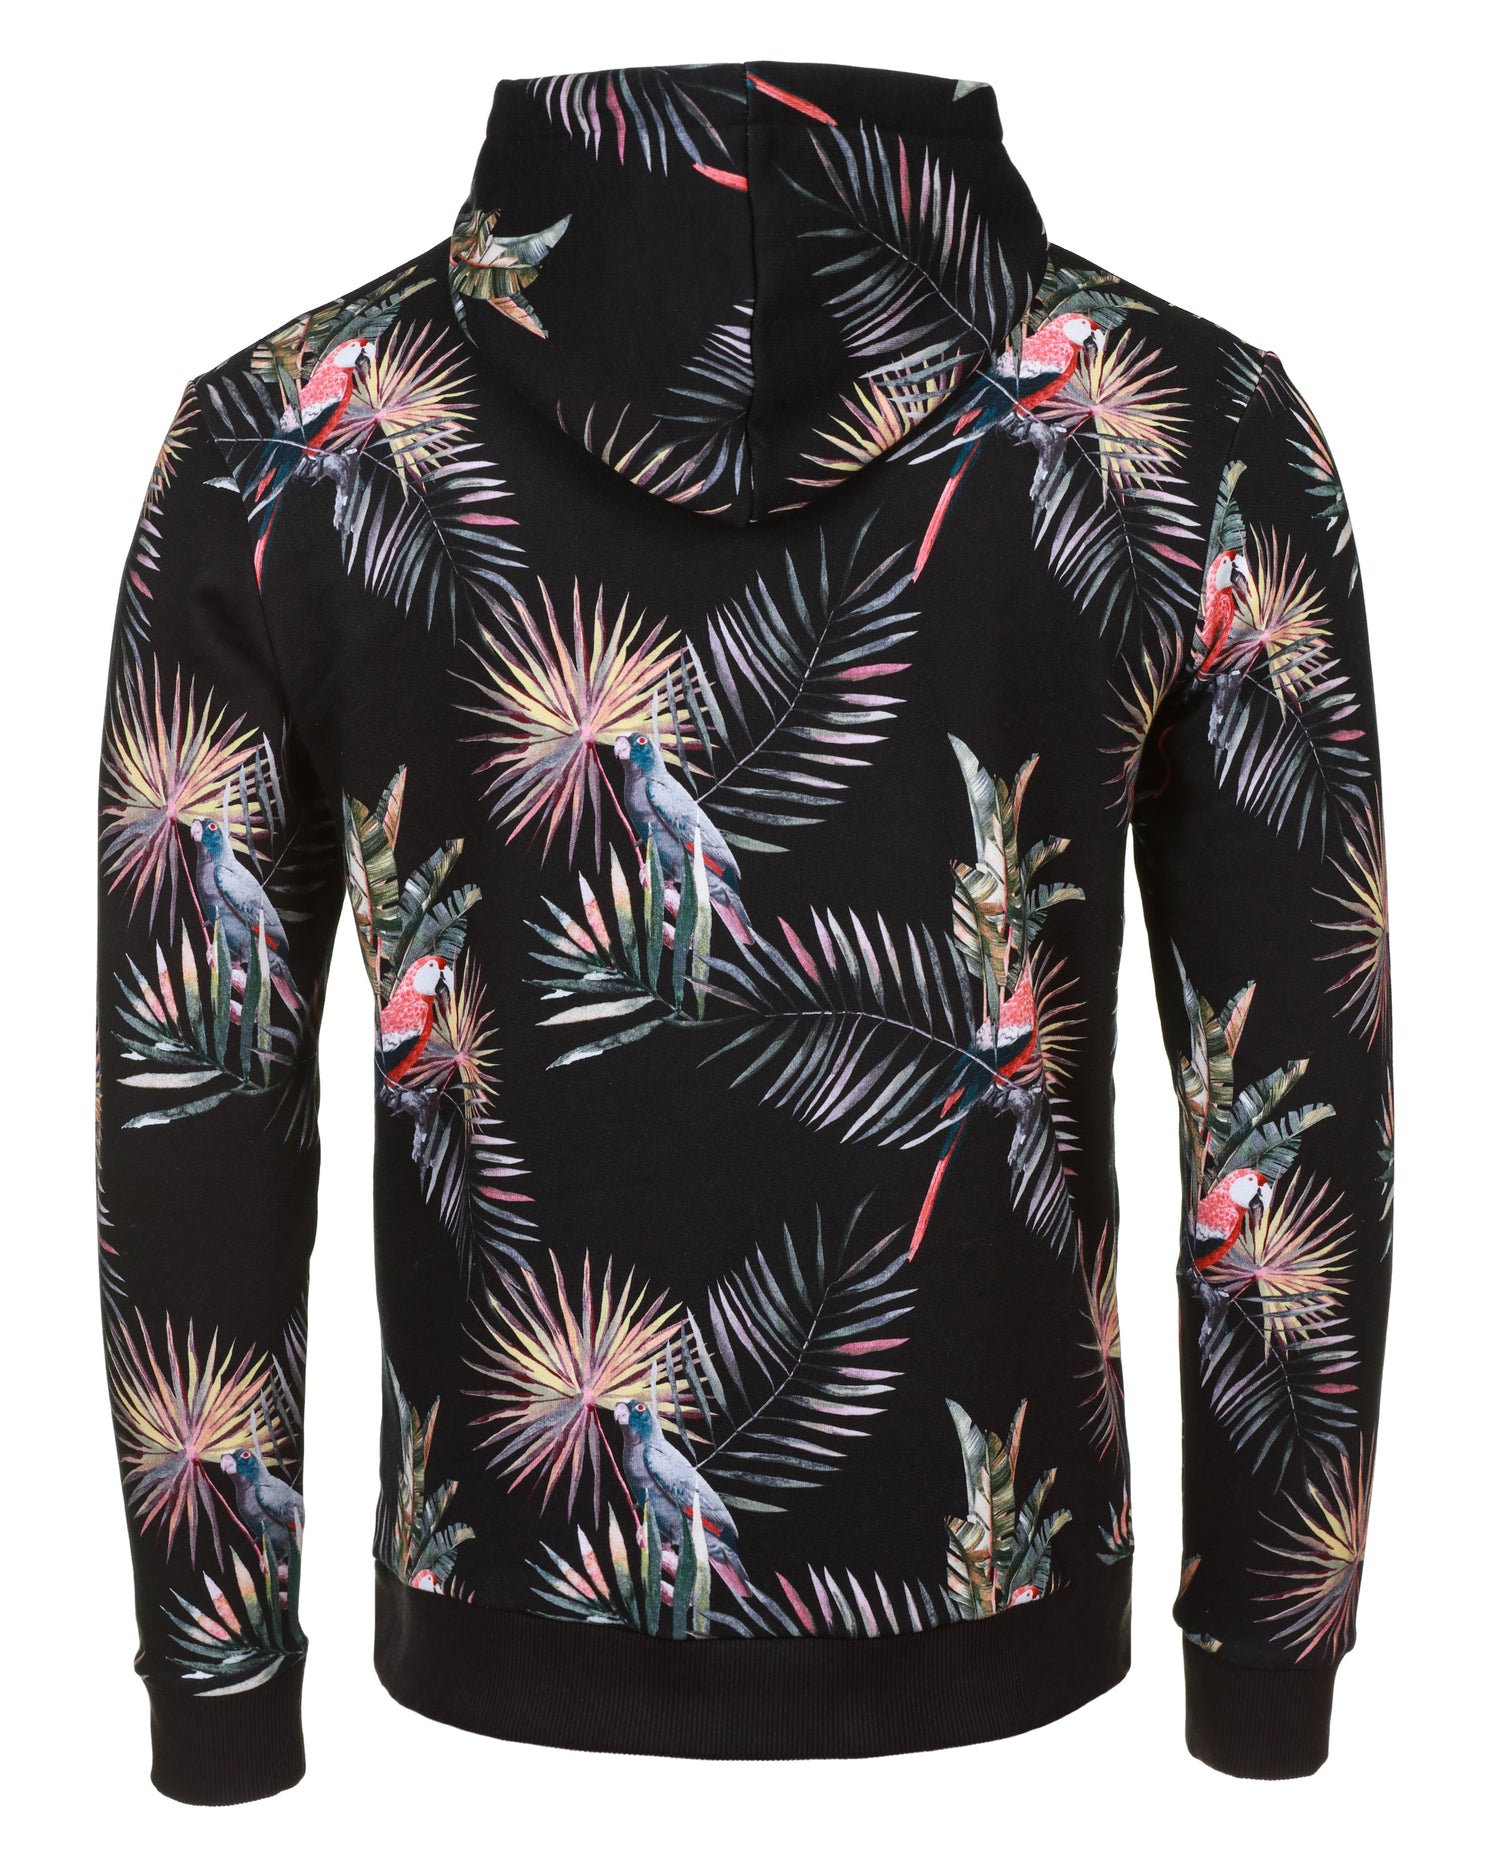 Tropical Hoodie - Black - Sweater by Urbbana